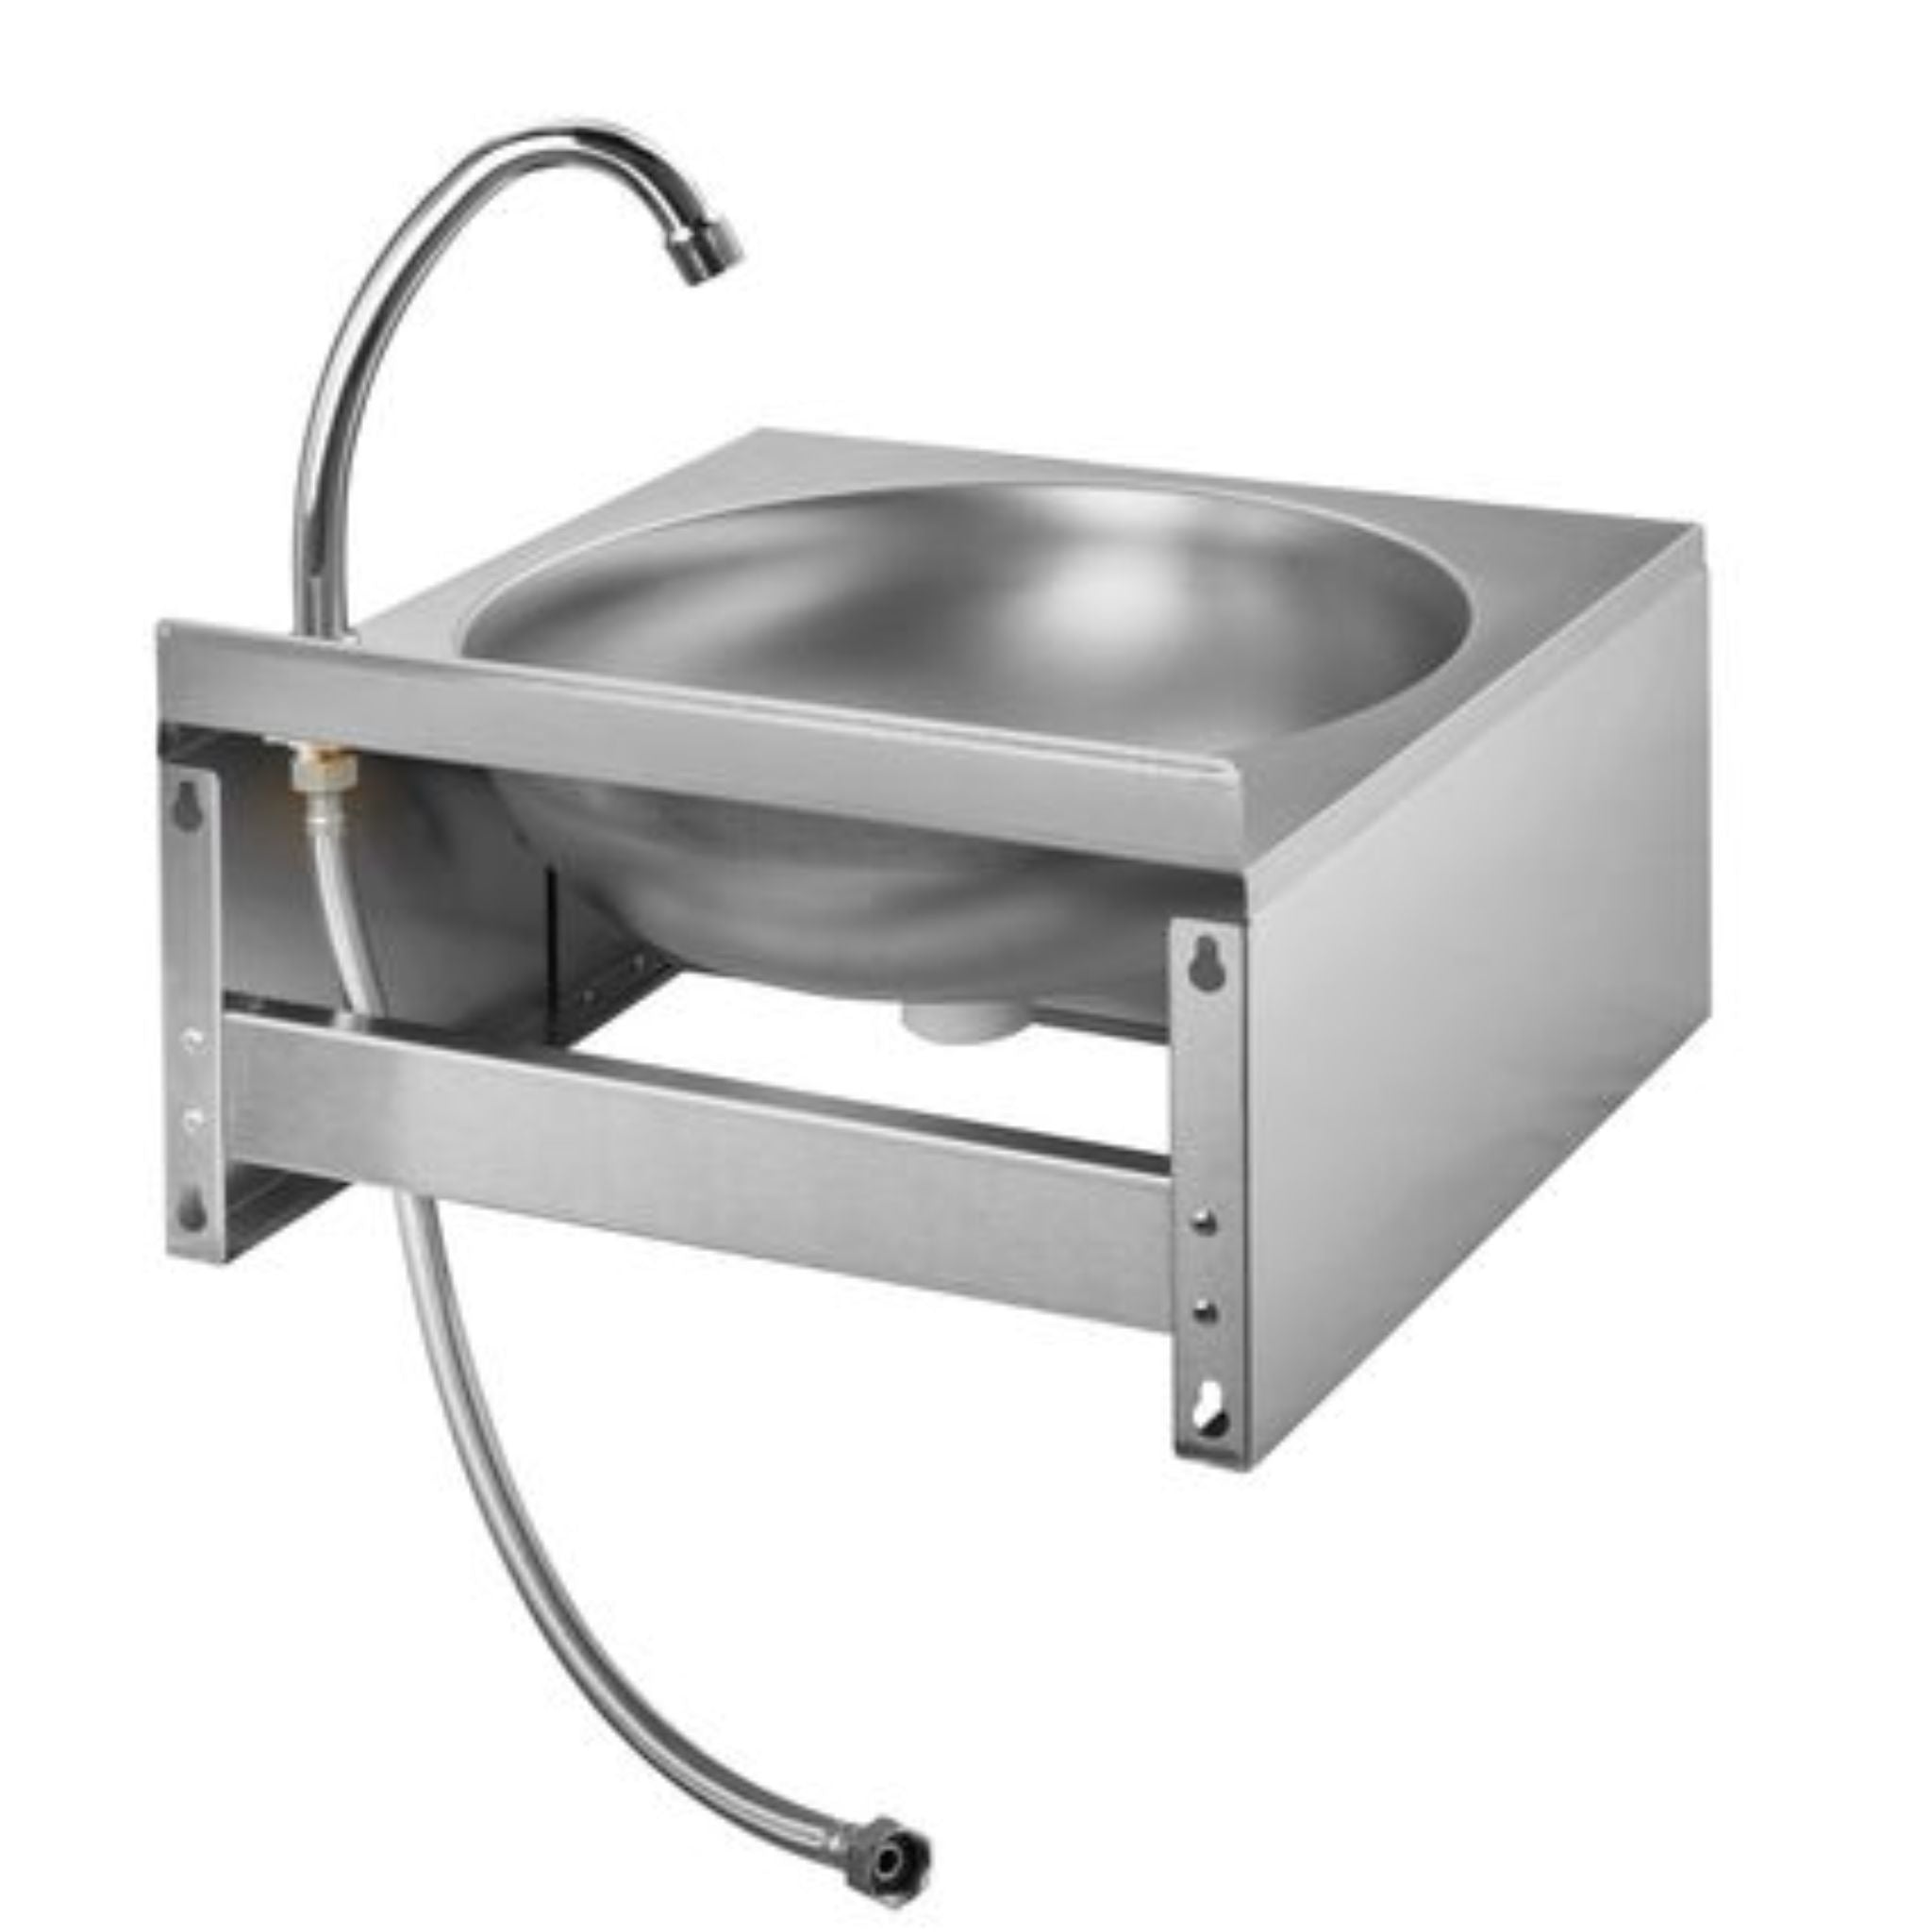 Standard stainless steel wash hand basin - 0